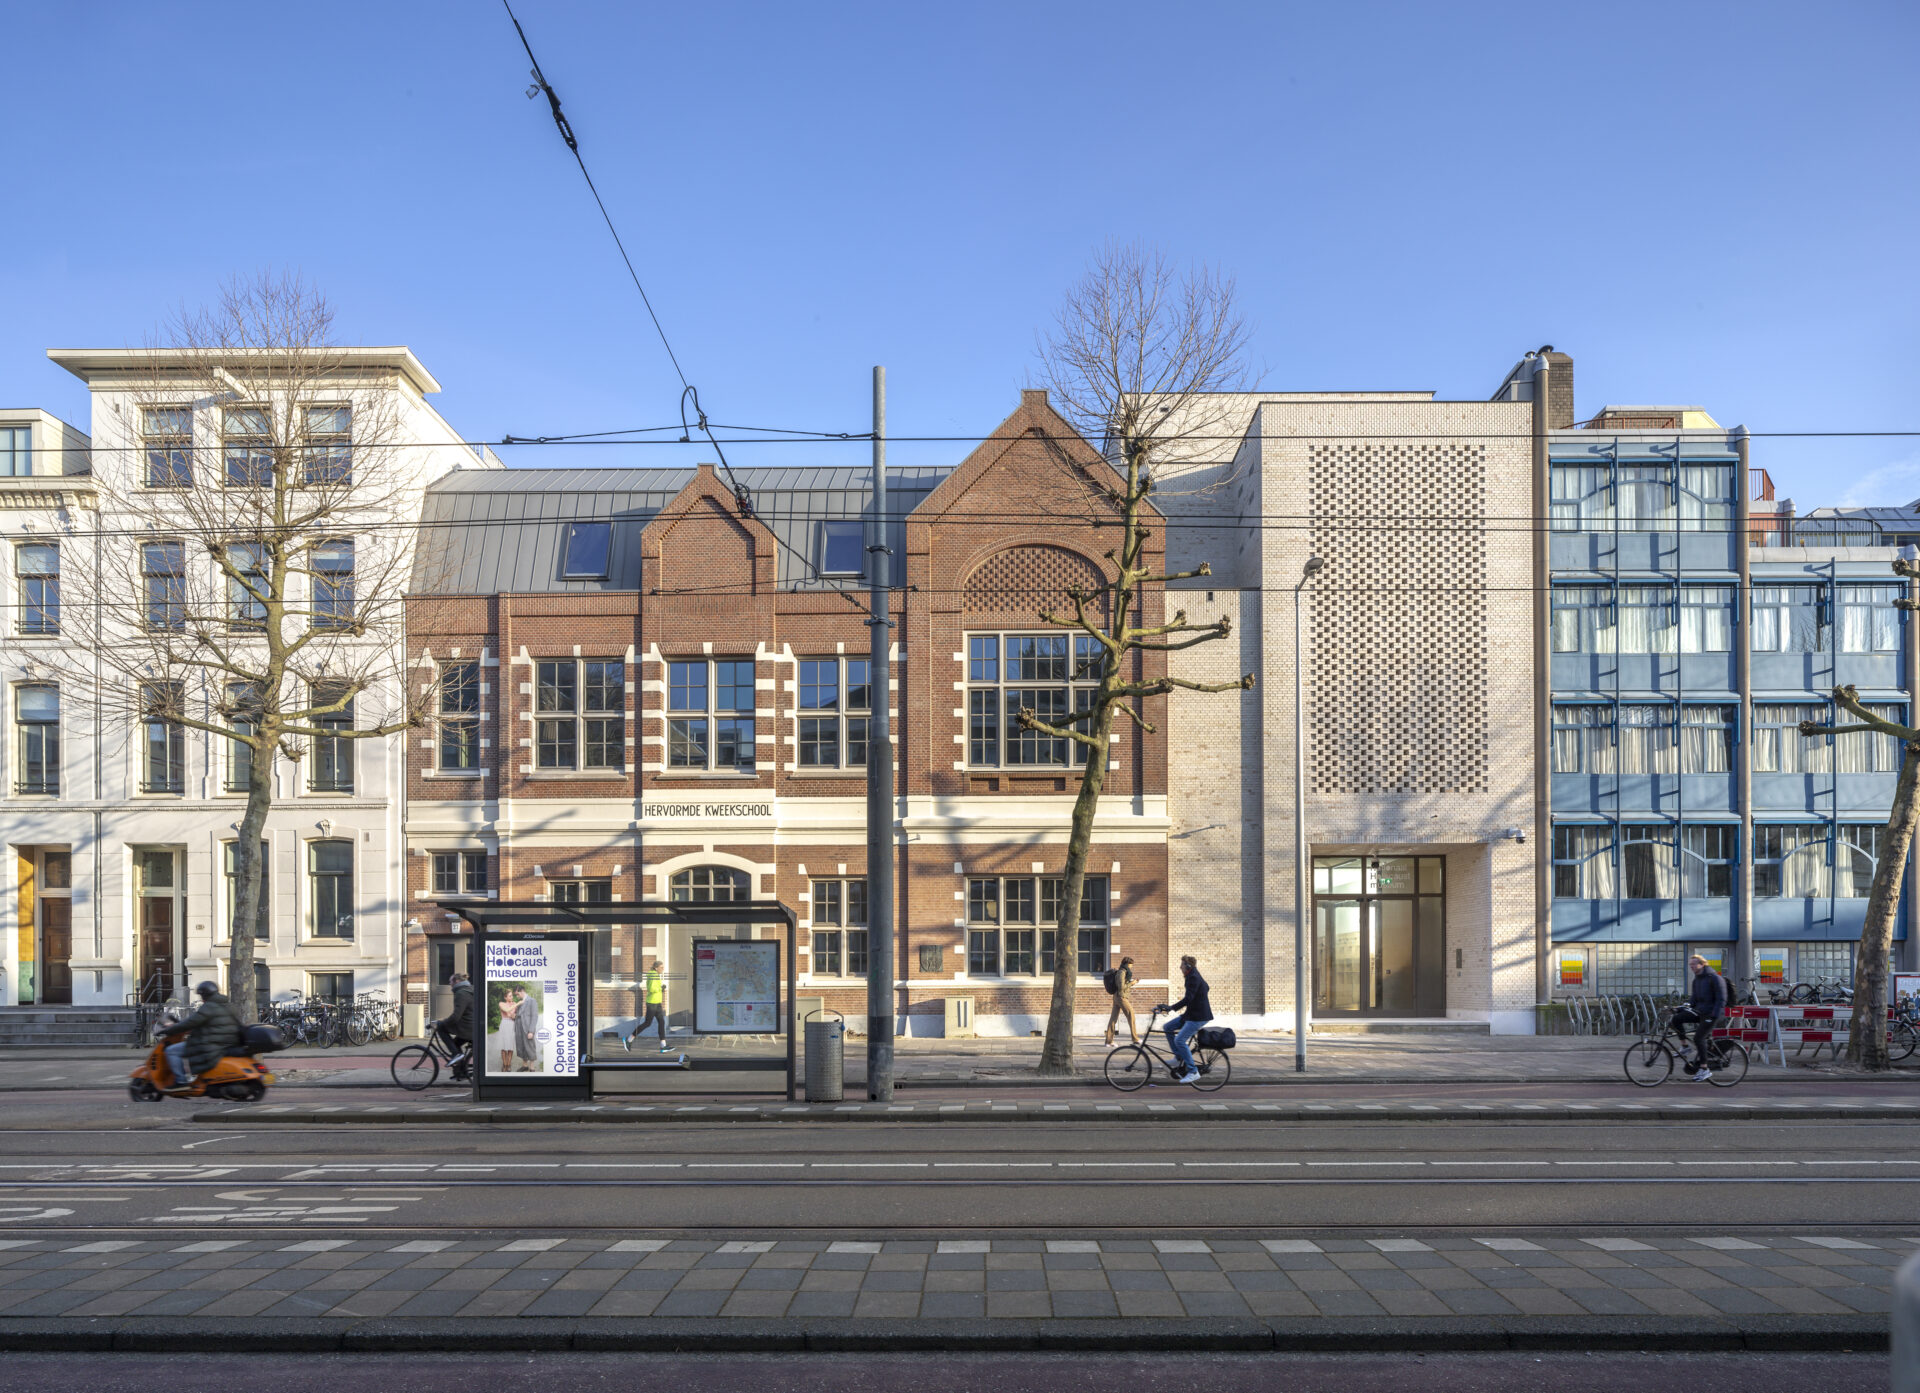 “Looted”: i beni ebraici saccheggiati in mostra ad Amsterdam